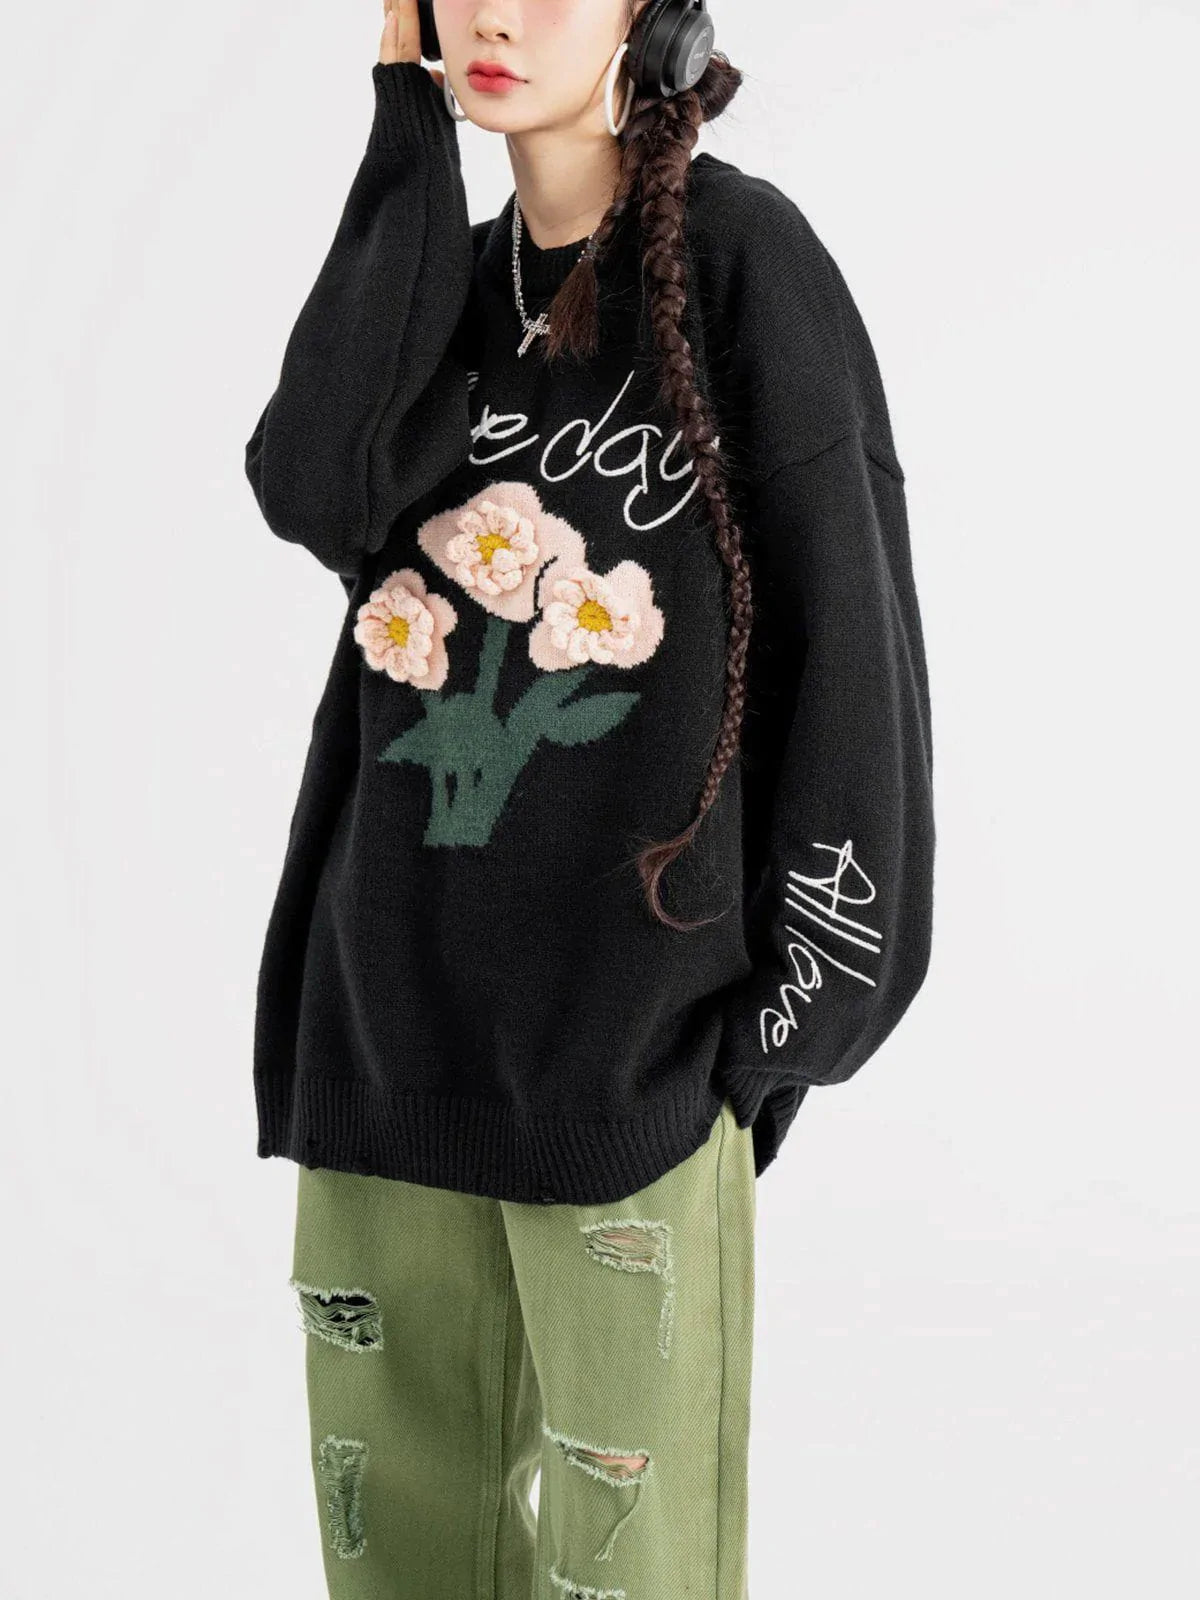 Majesda® - Three-Dimensional Flowers Sweater outfit ideas streetwear fashion